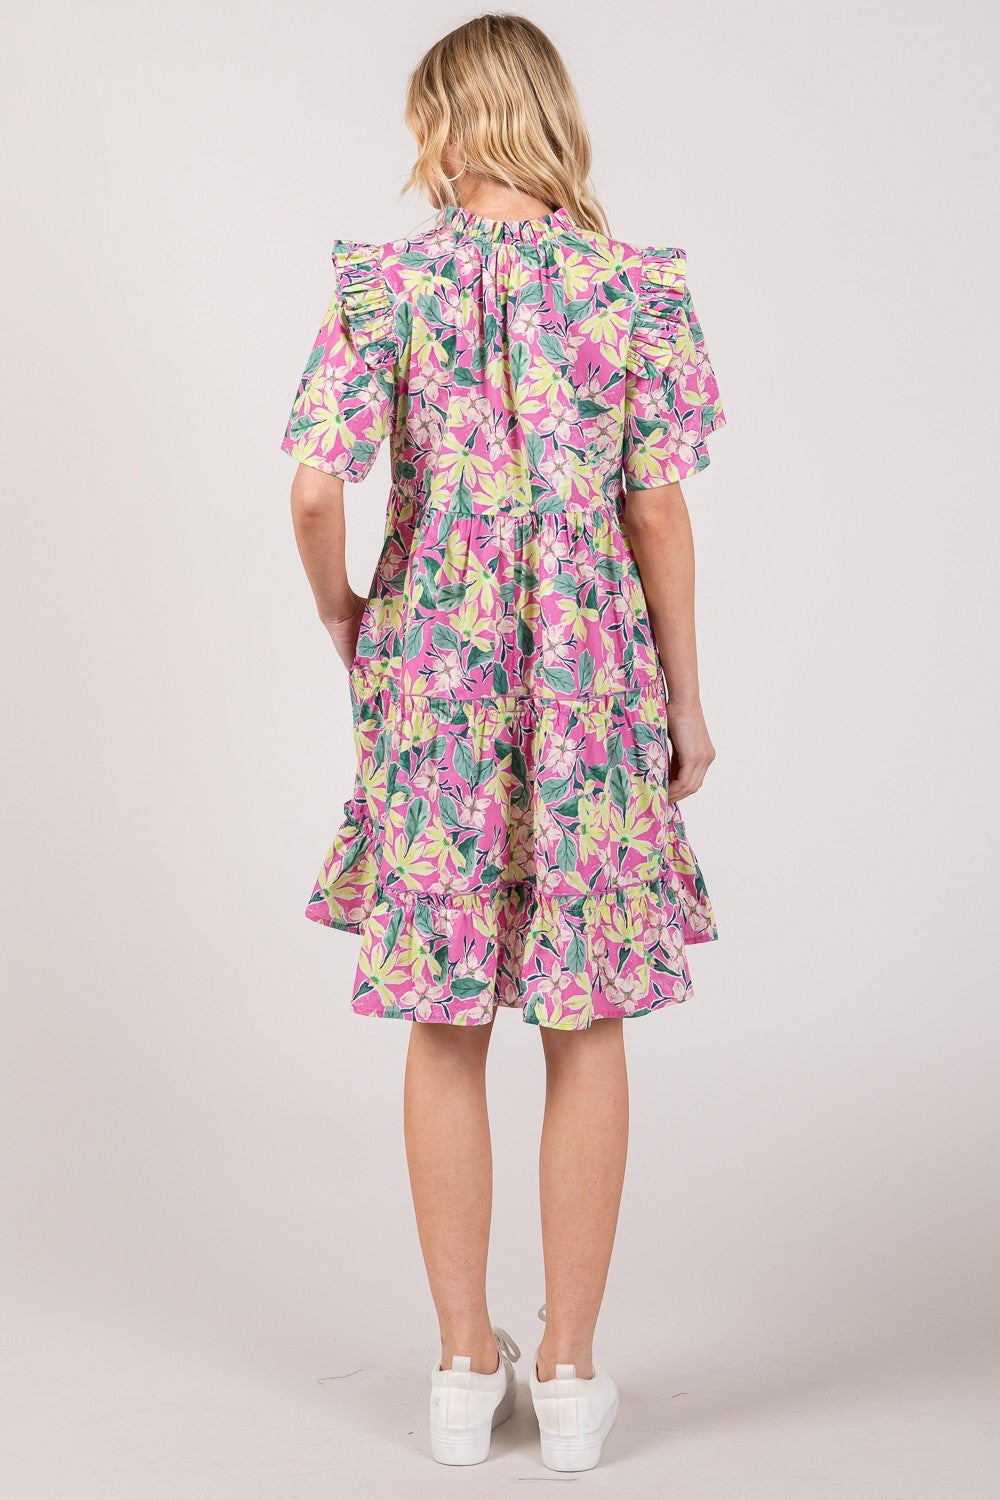 SAGE + FIG Floral Ruffle Short Sleeve Dress - Tigbul's Variety Fashion Shop